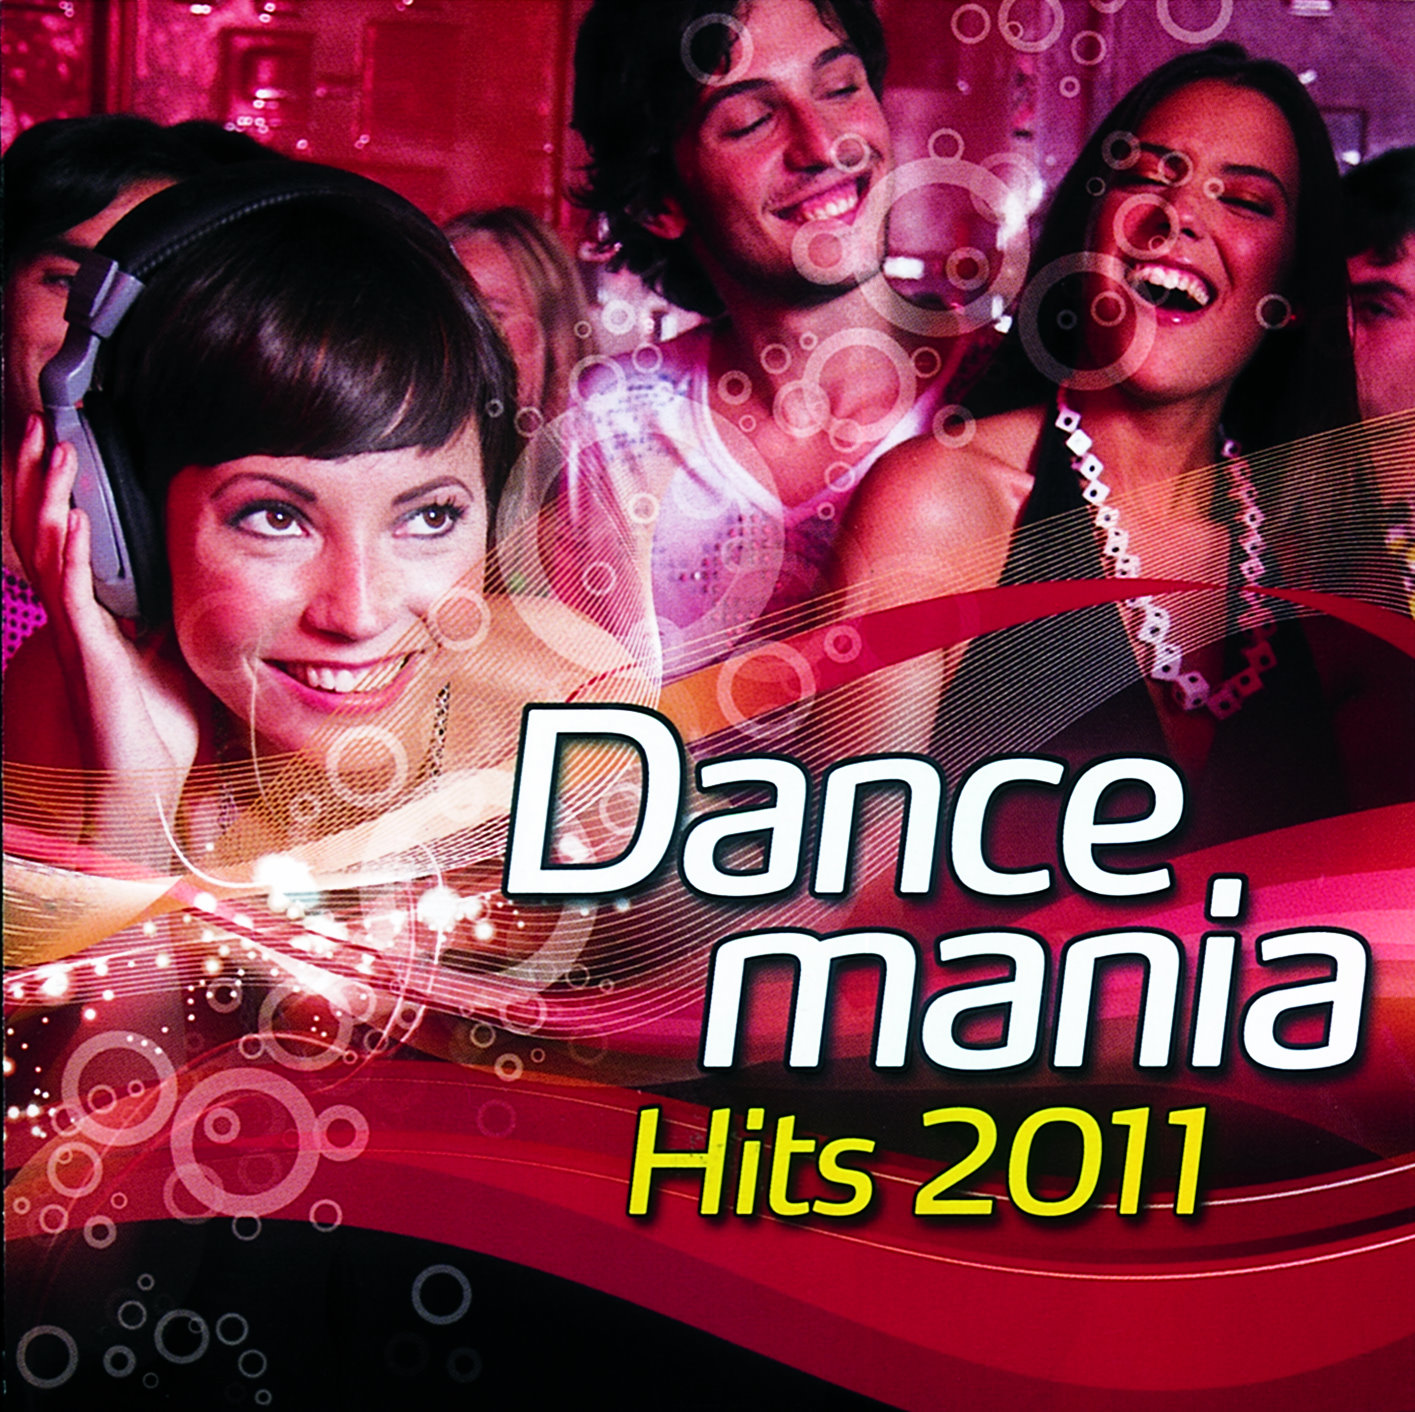 Dance mania. Dancemania плакат. Hit Mania Dance 2001. Пакет дэнс Мания.